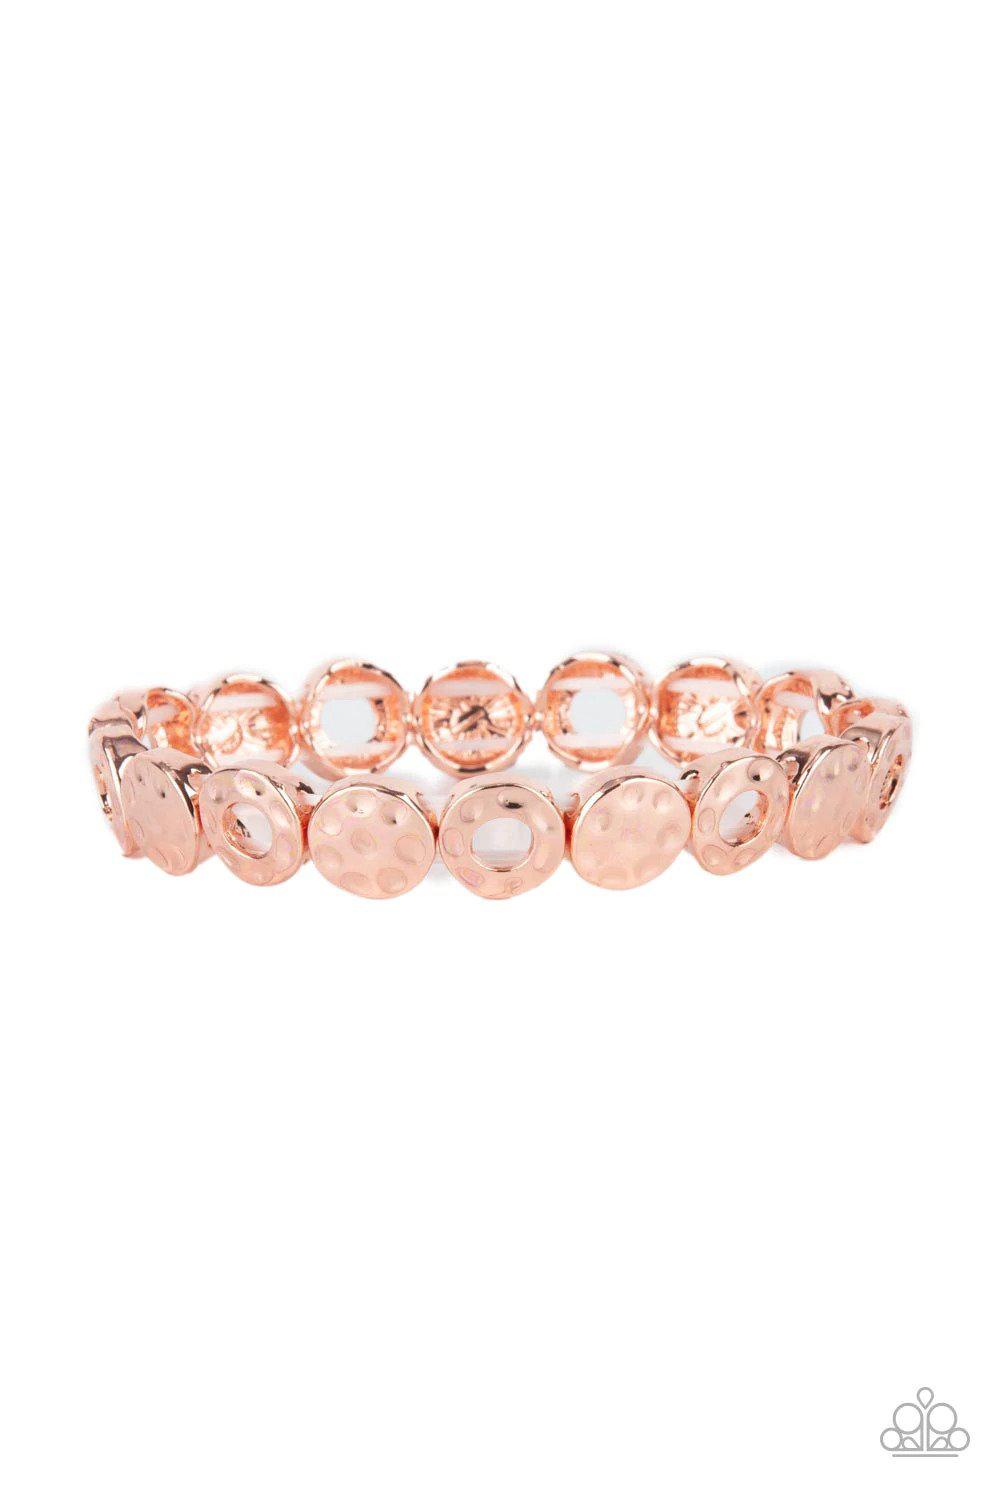 Metro Metalsmith Copper Bracelet - Paparazzi Accessories- lightbox - CarasShop.com - $5 Jewelry by Cara Jewels